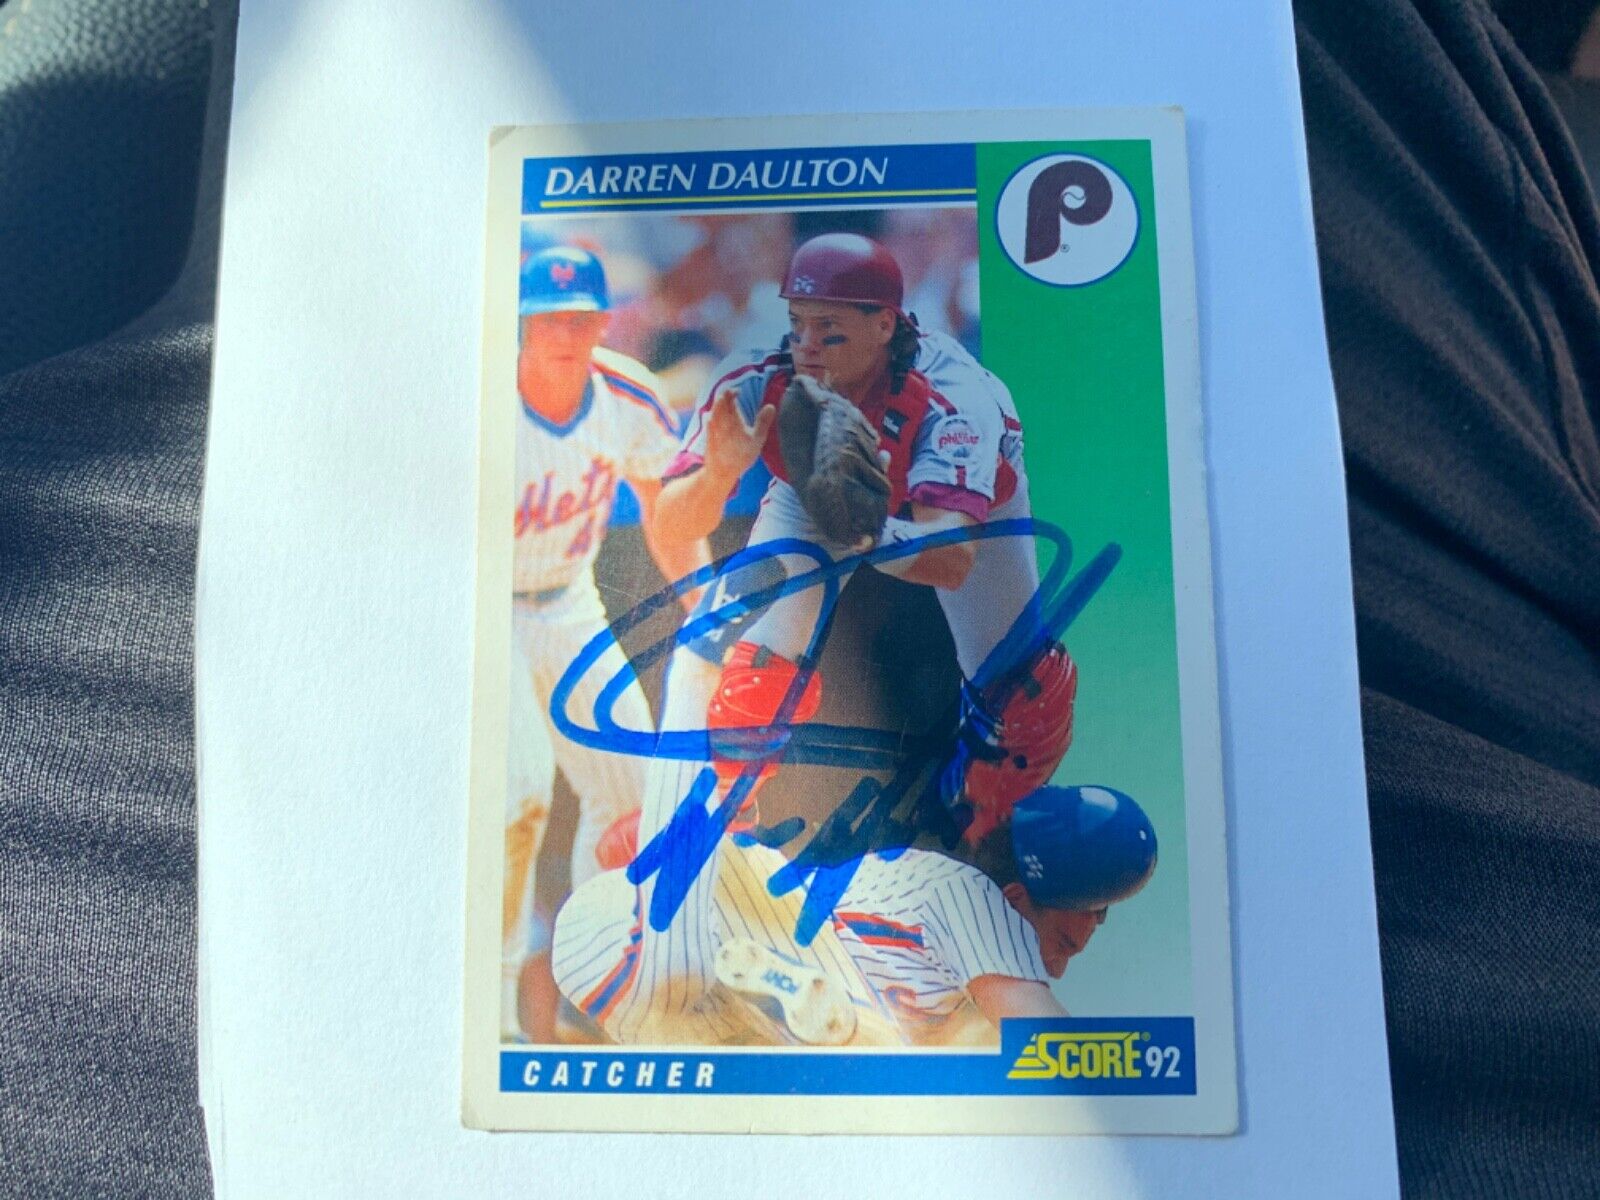 1992 Score Darren Daulton Autographed Signed Baseball Card